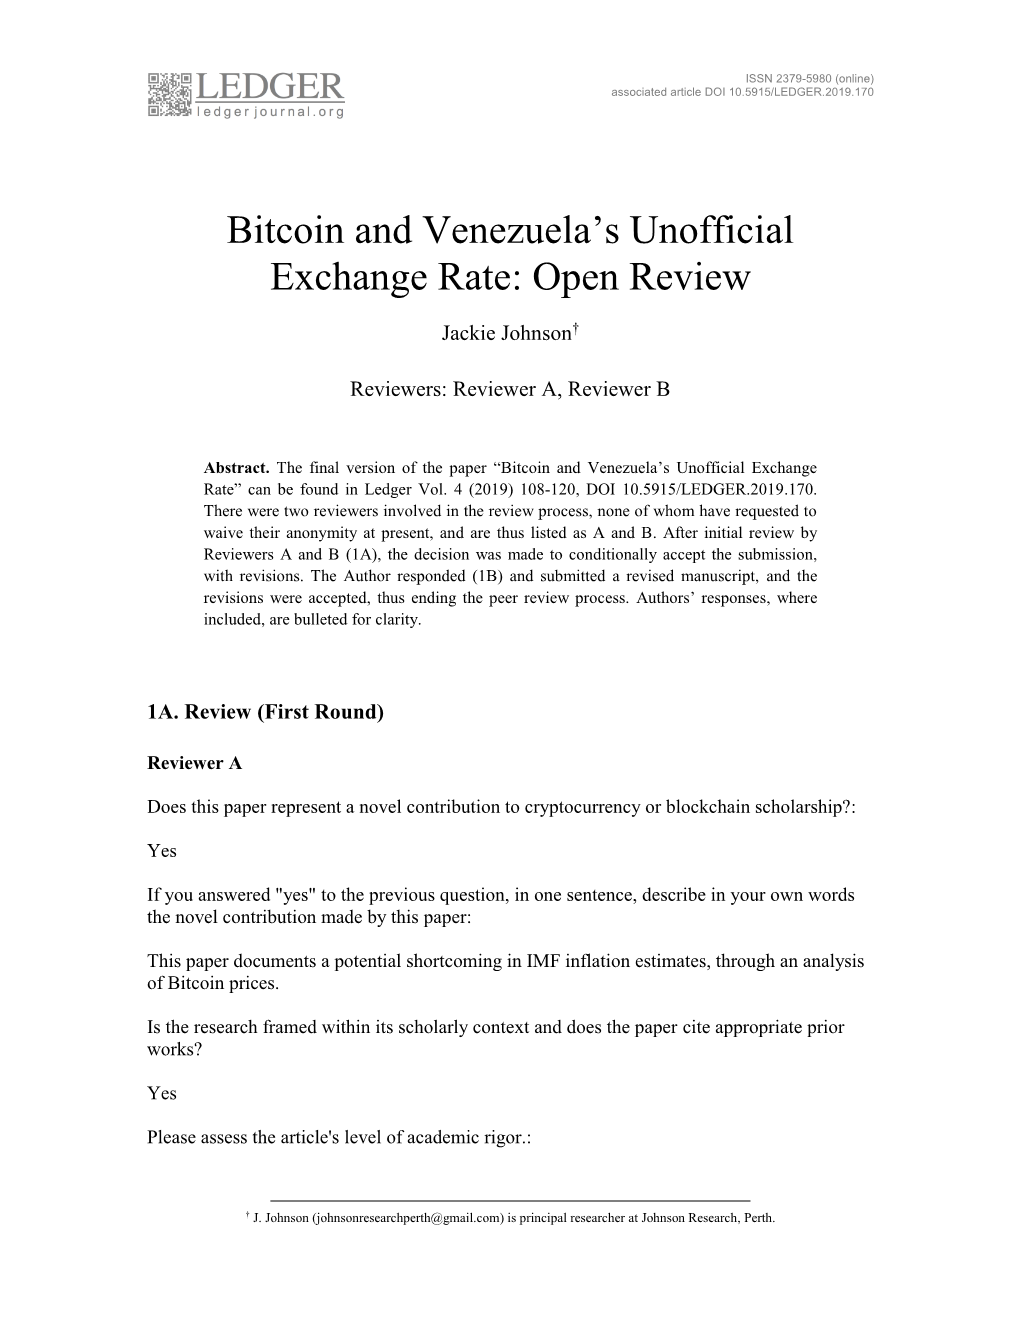 Bitcoin and Venezuela's Unofficial Exchange Rate: Open Review